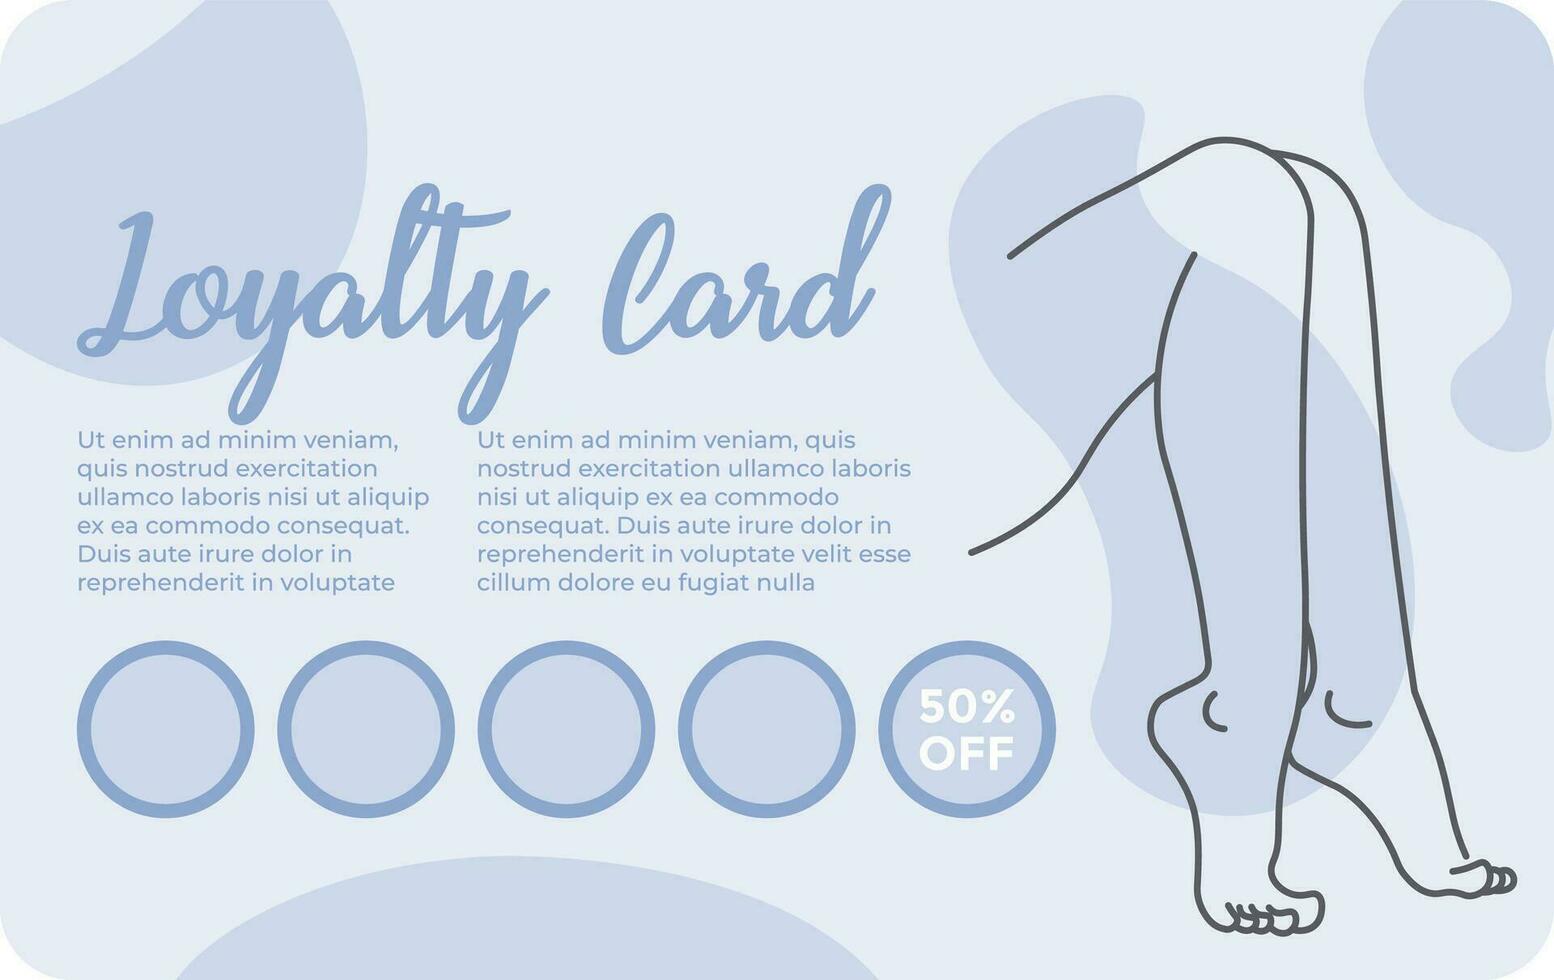 Epilation and spa salon, pedicure loyalty card vector